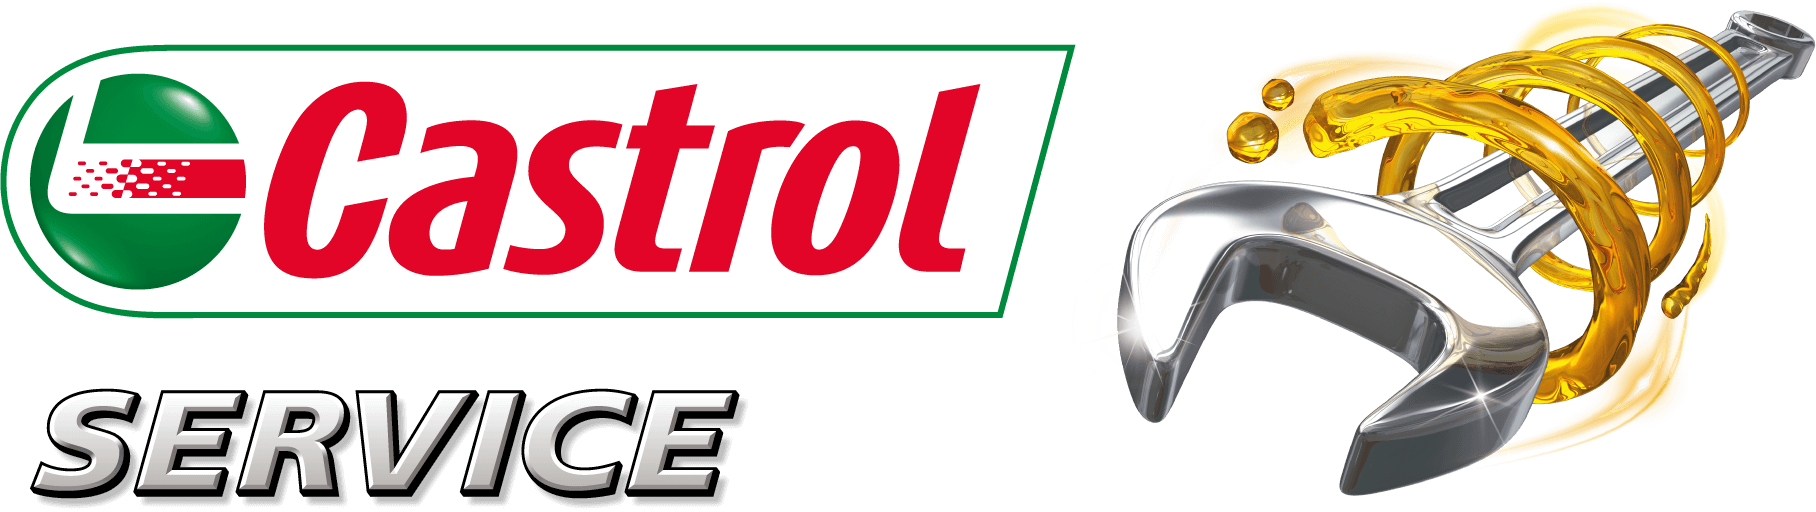 Castrol Service Logo